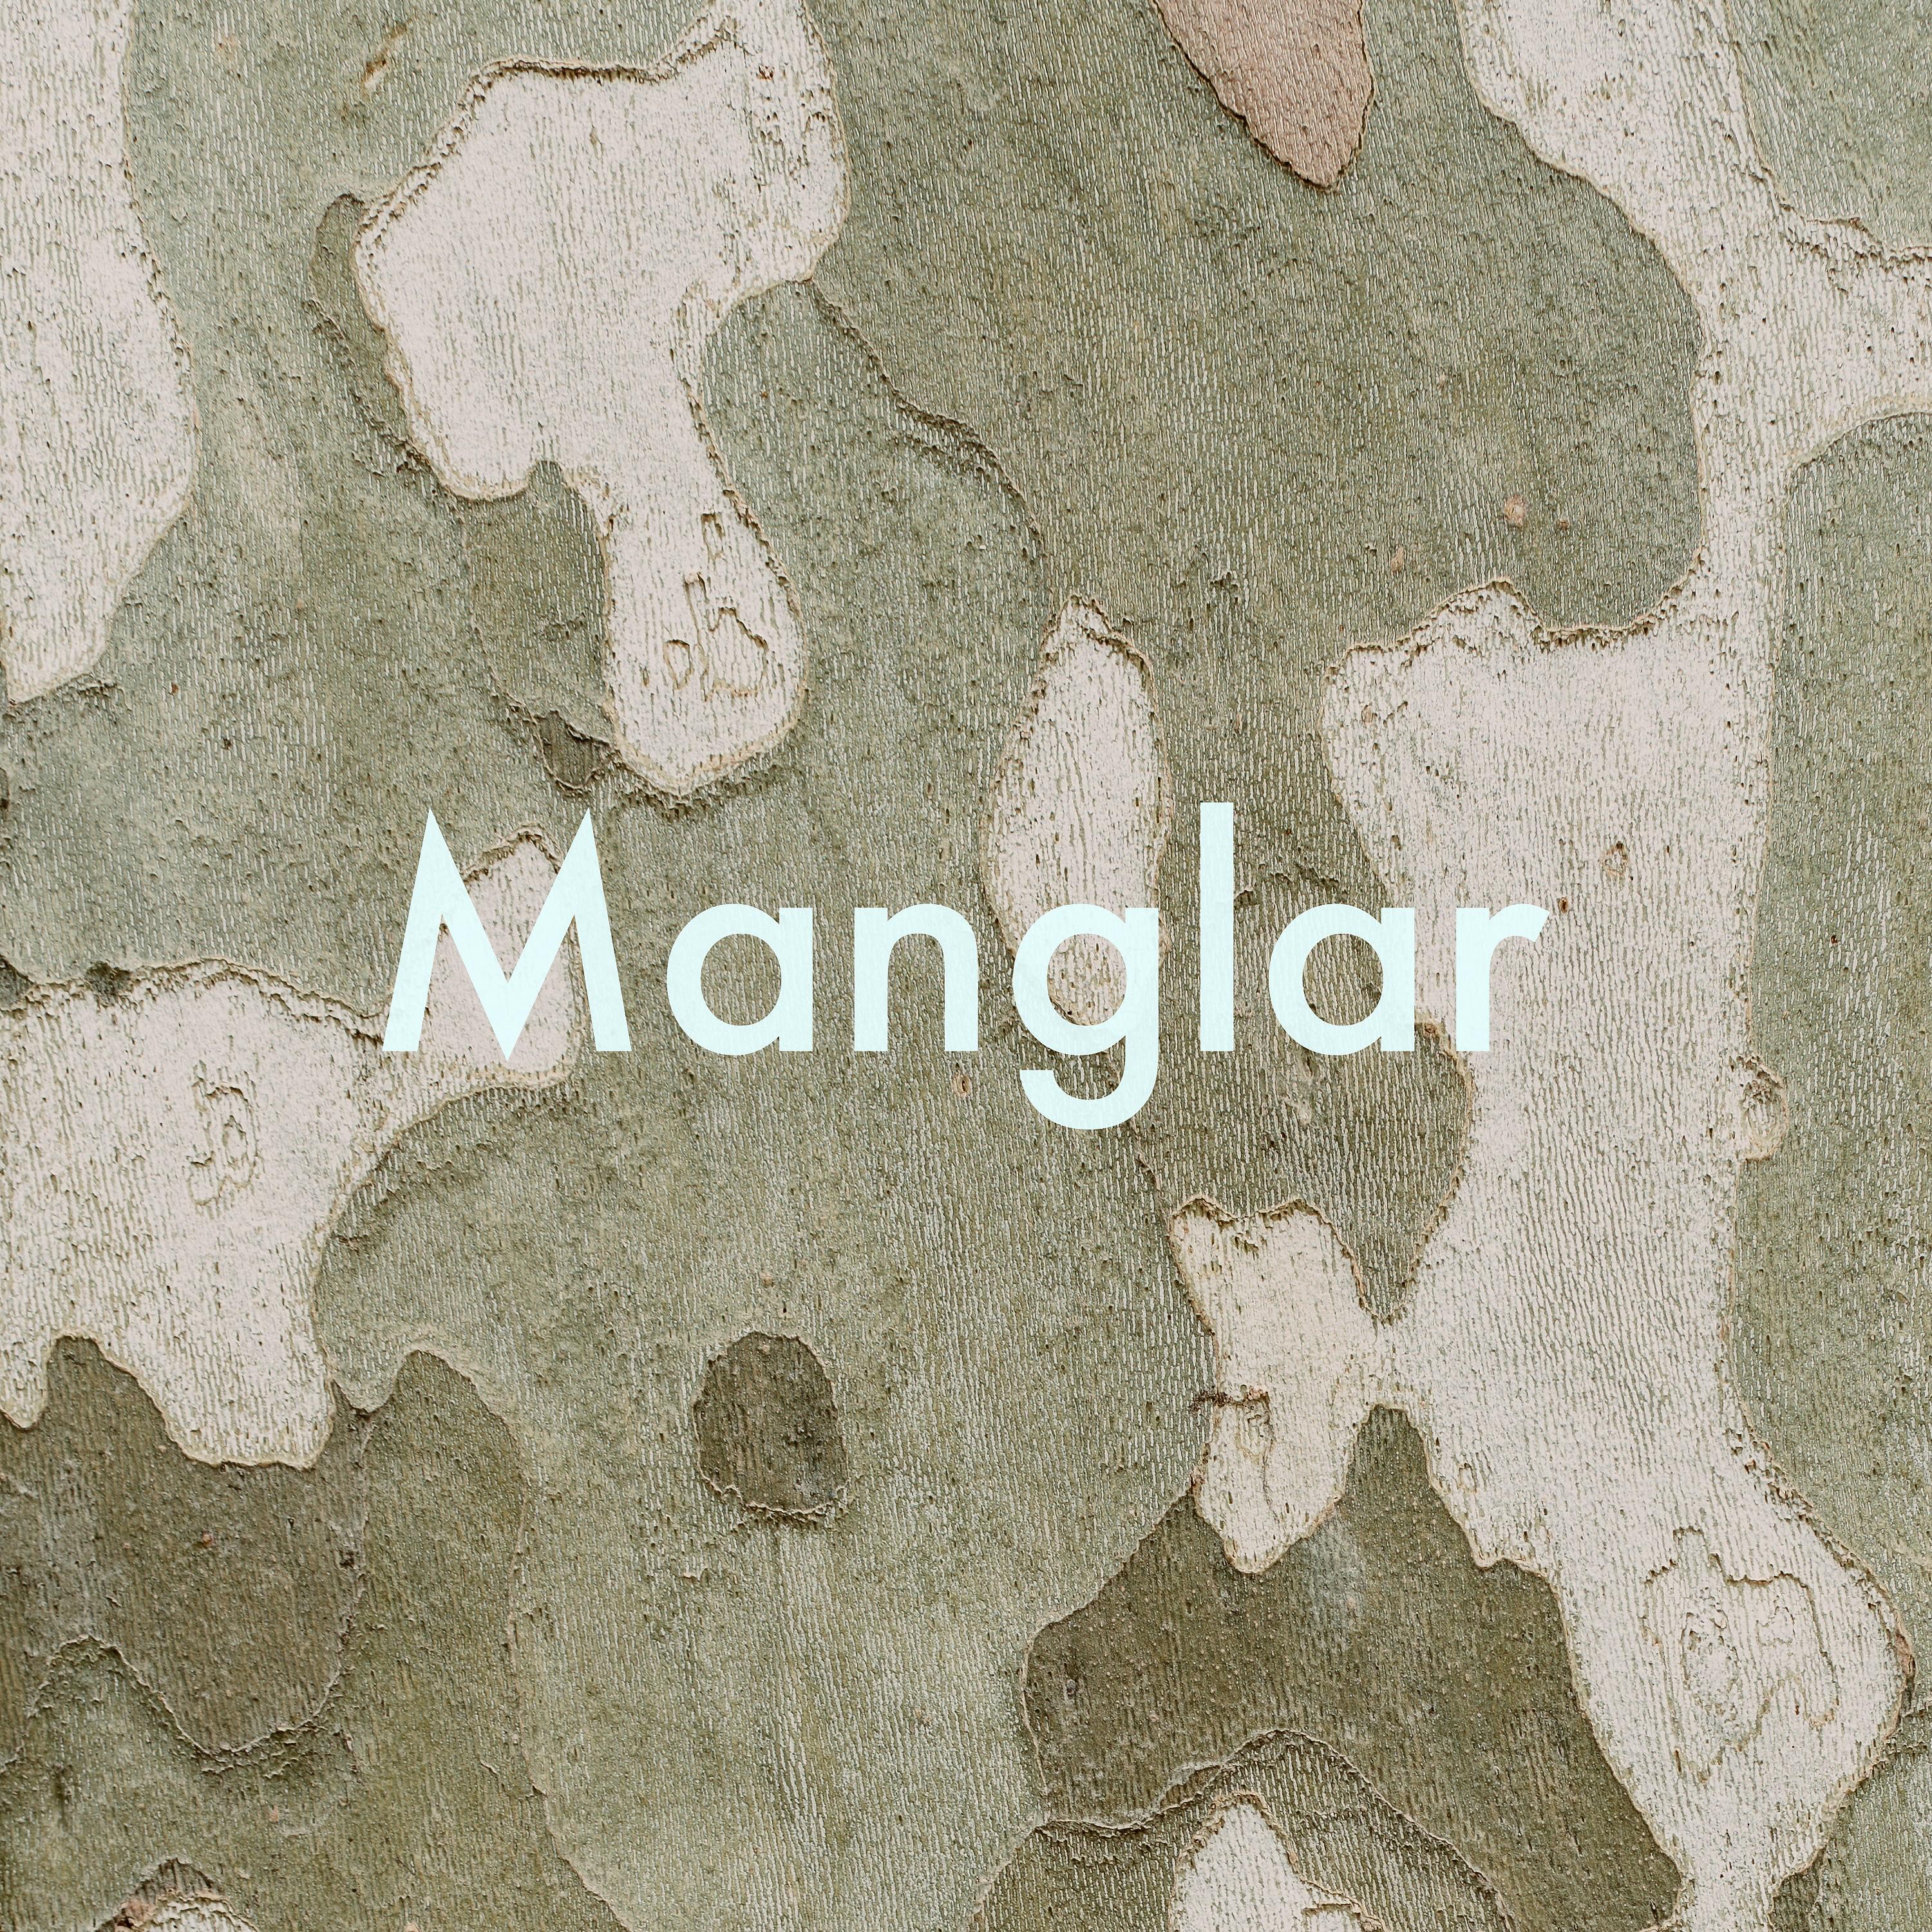 Постер альбома Manglar